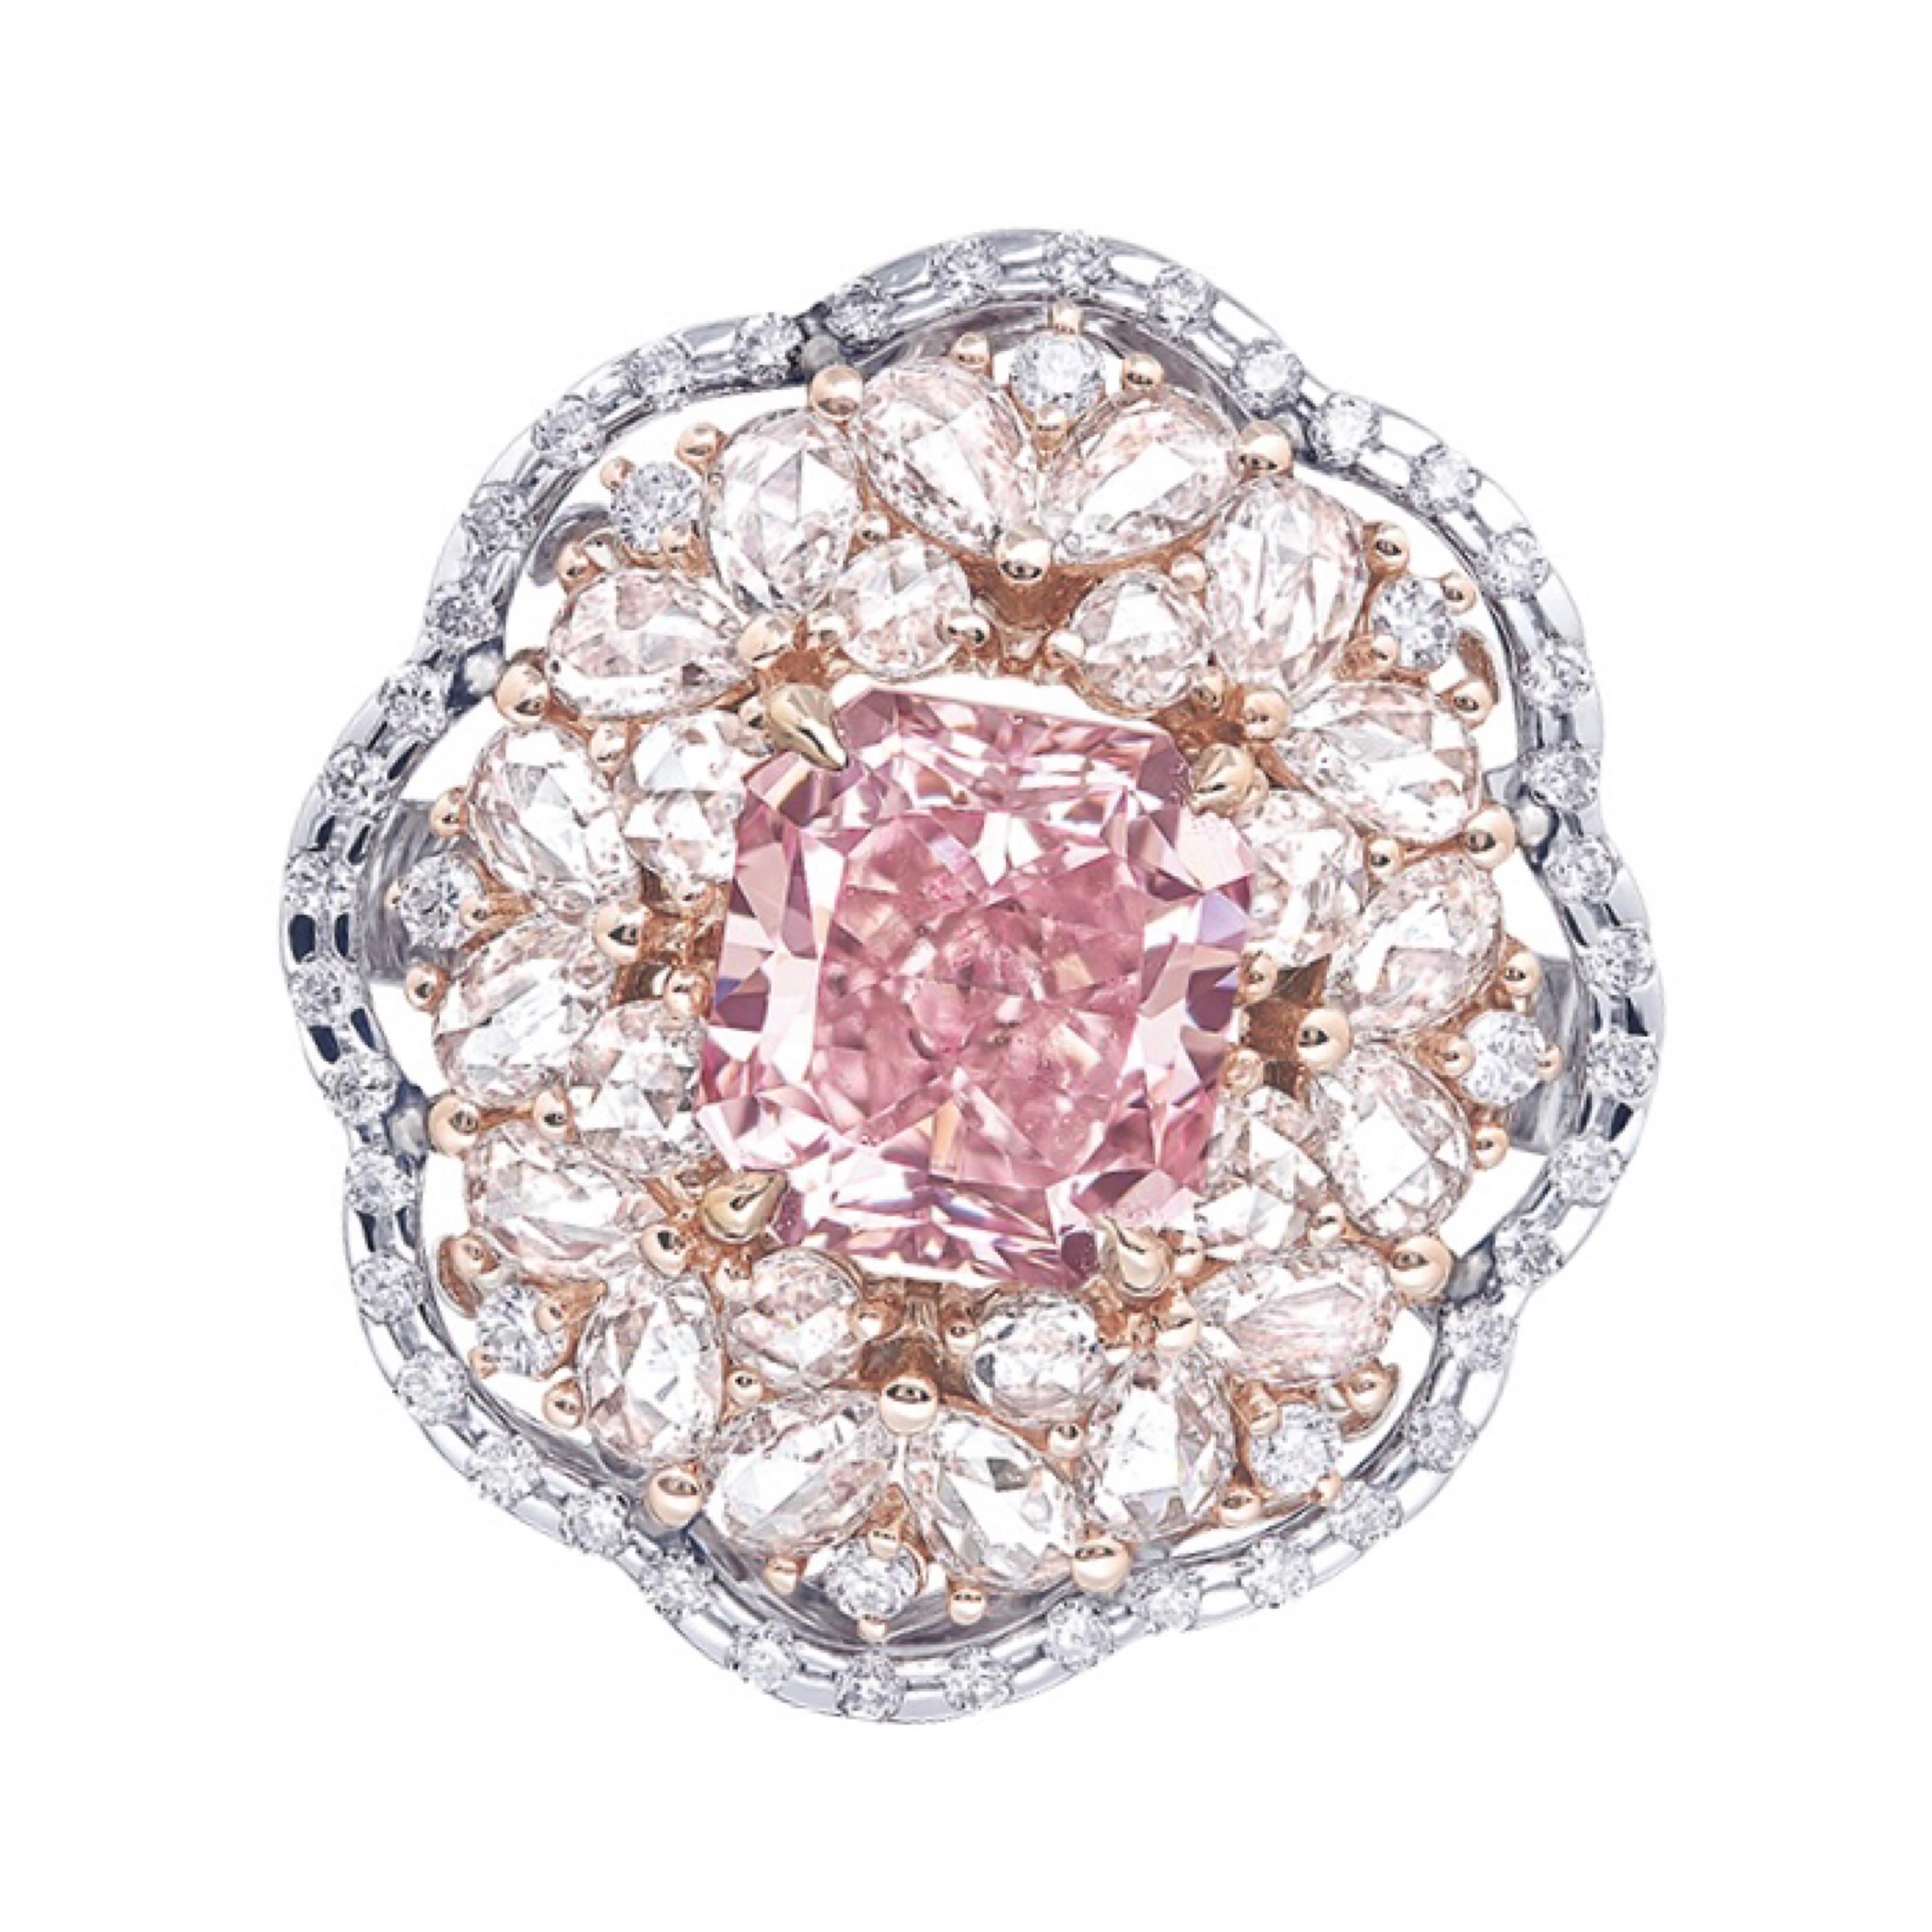 Cushion Cut Emilio Jewelry 2.50 Carat GIA Certified Internally Flawless Pink Diamond Ring For Sale